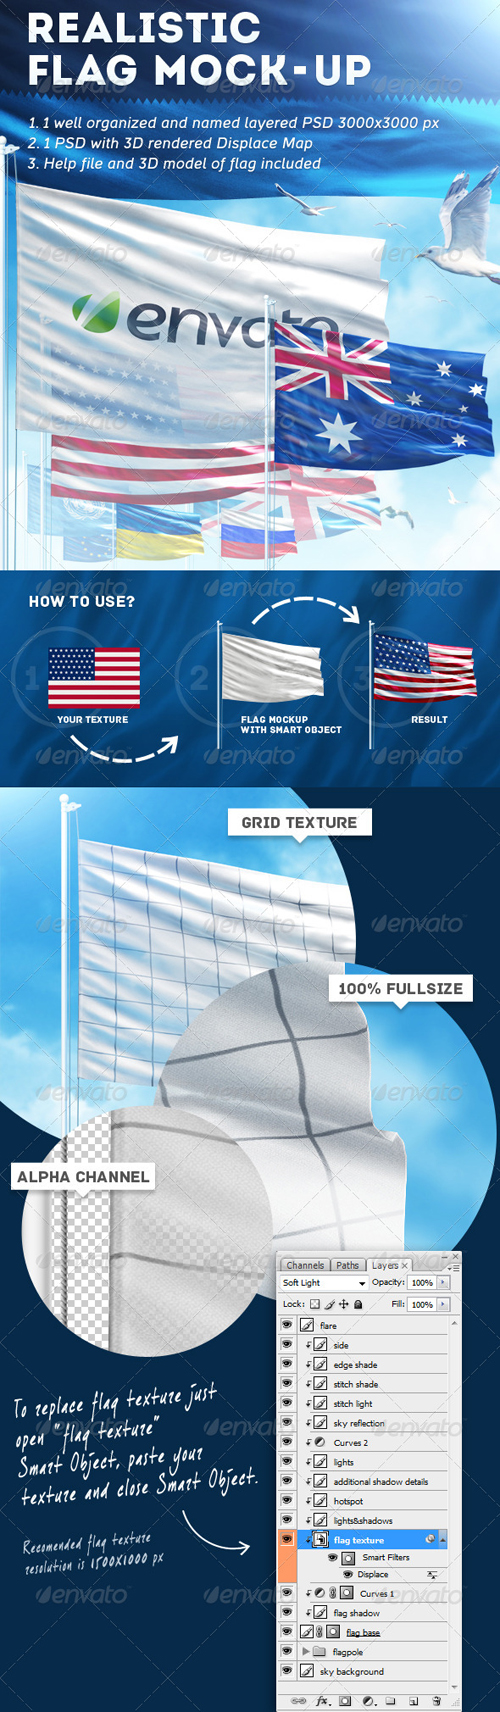 Realistic Flag Mock-Up